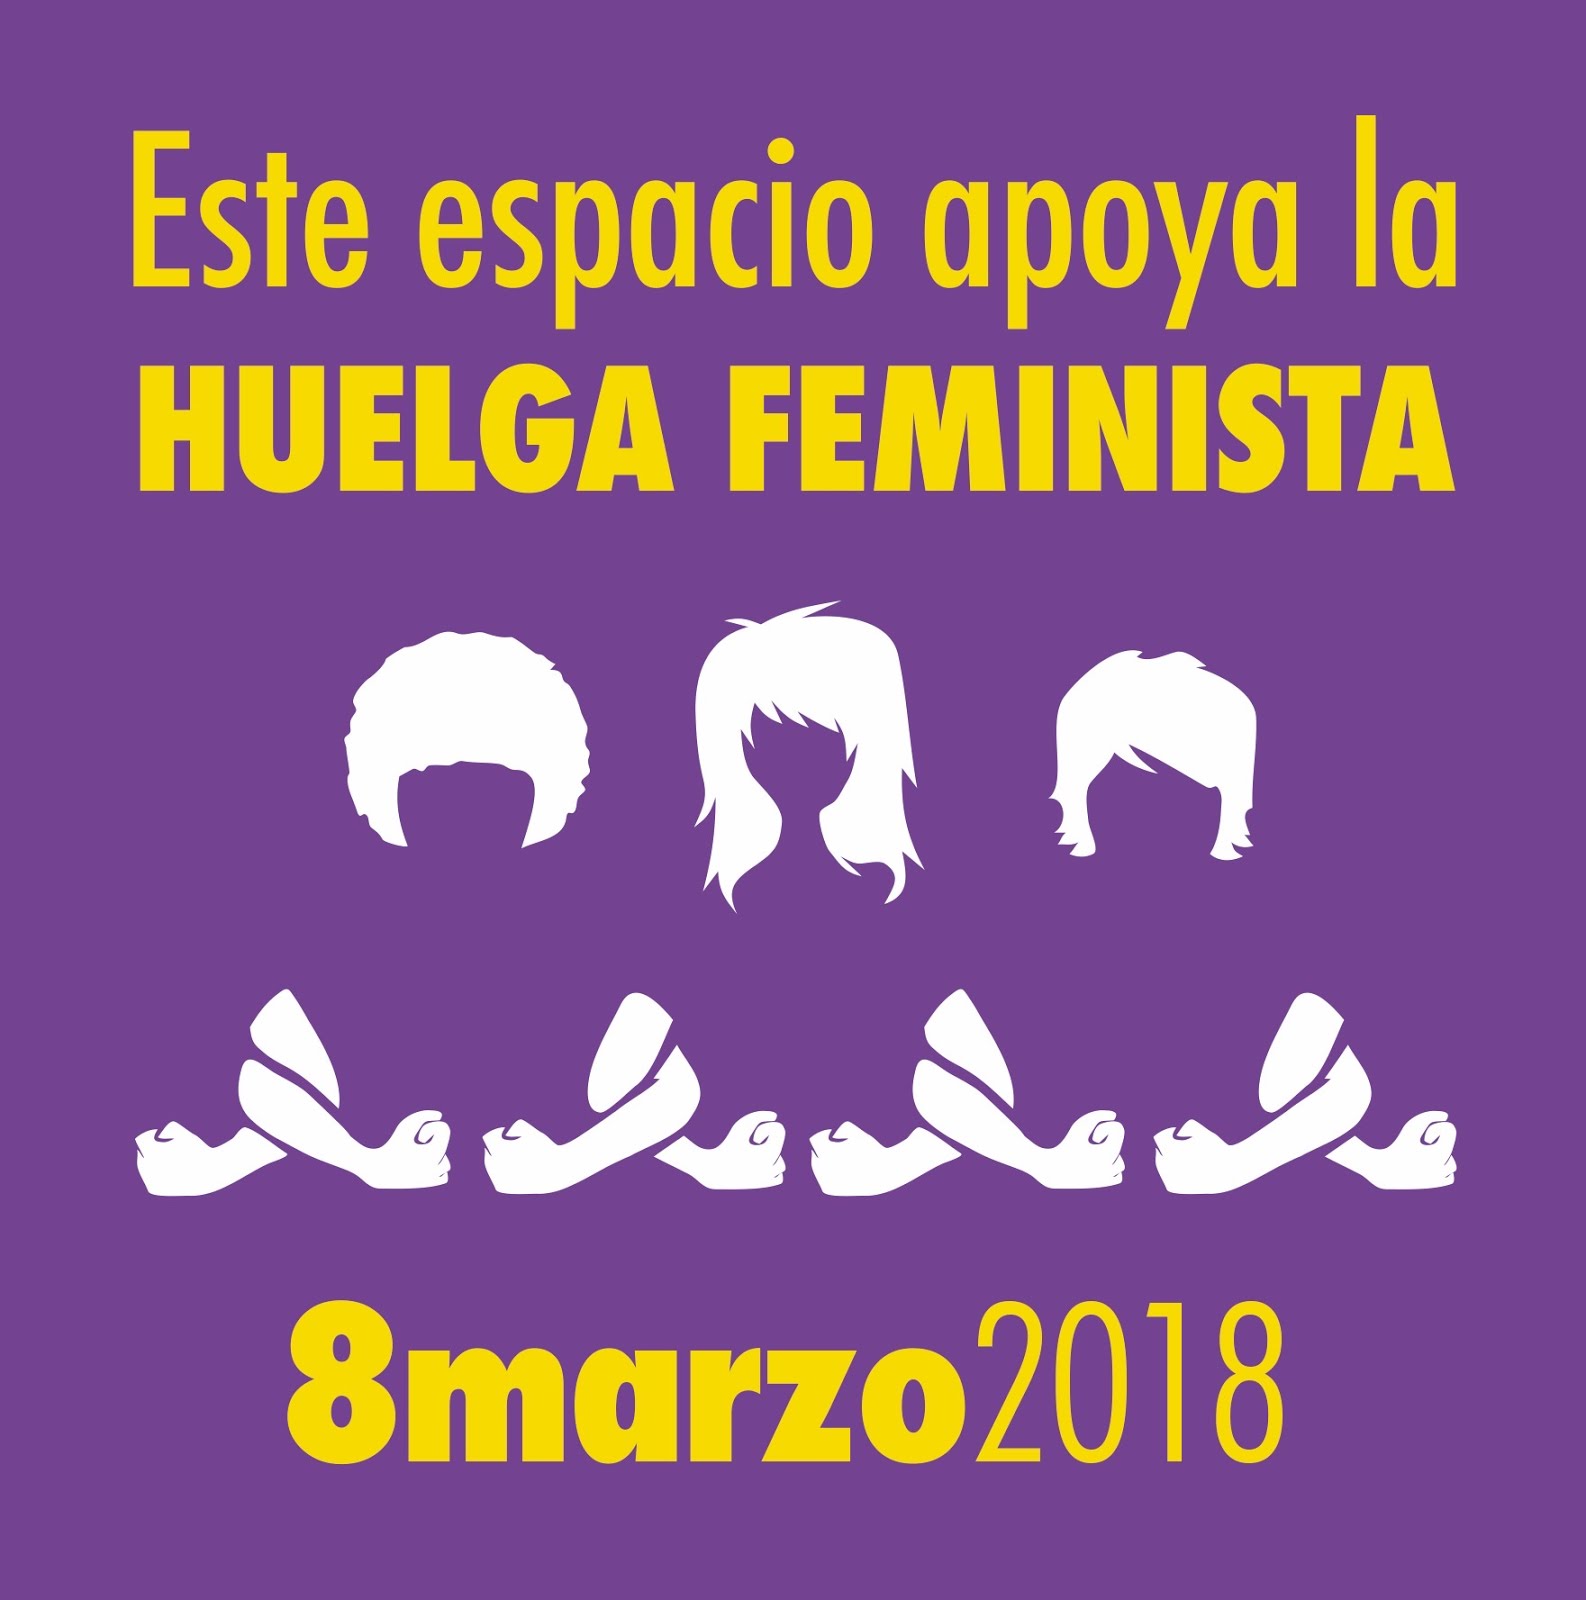 Hacia la Huelga Feminista